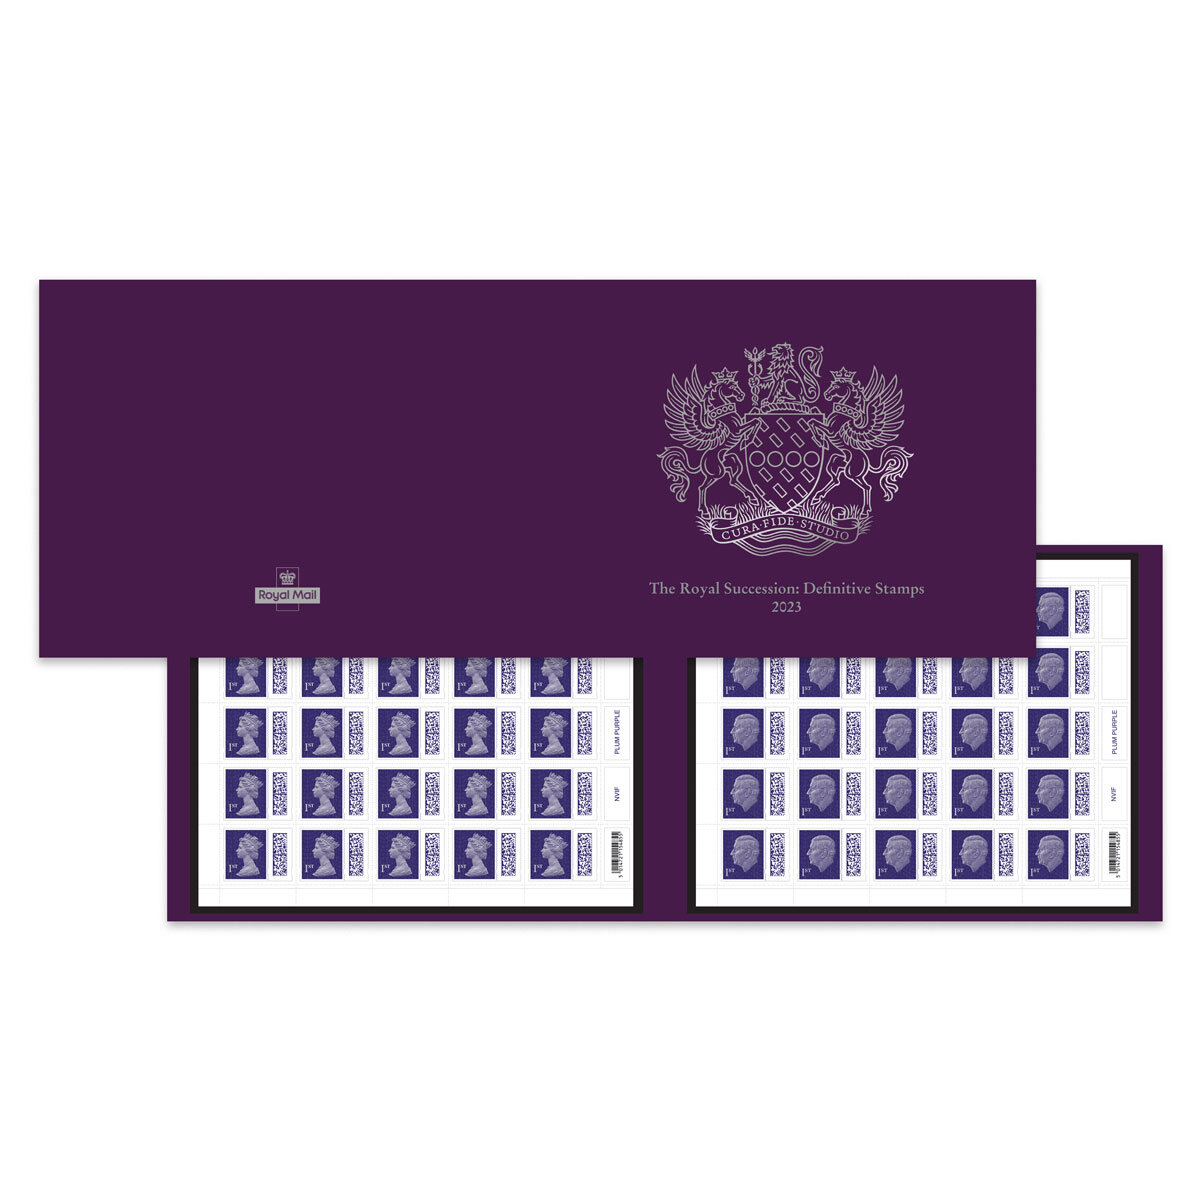 Buy Royal Mail Coronation Stamps Folder Image1 at Costco.co.uk